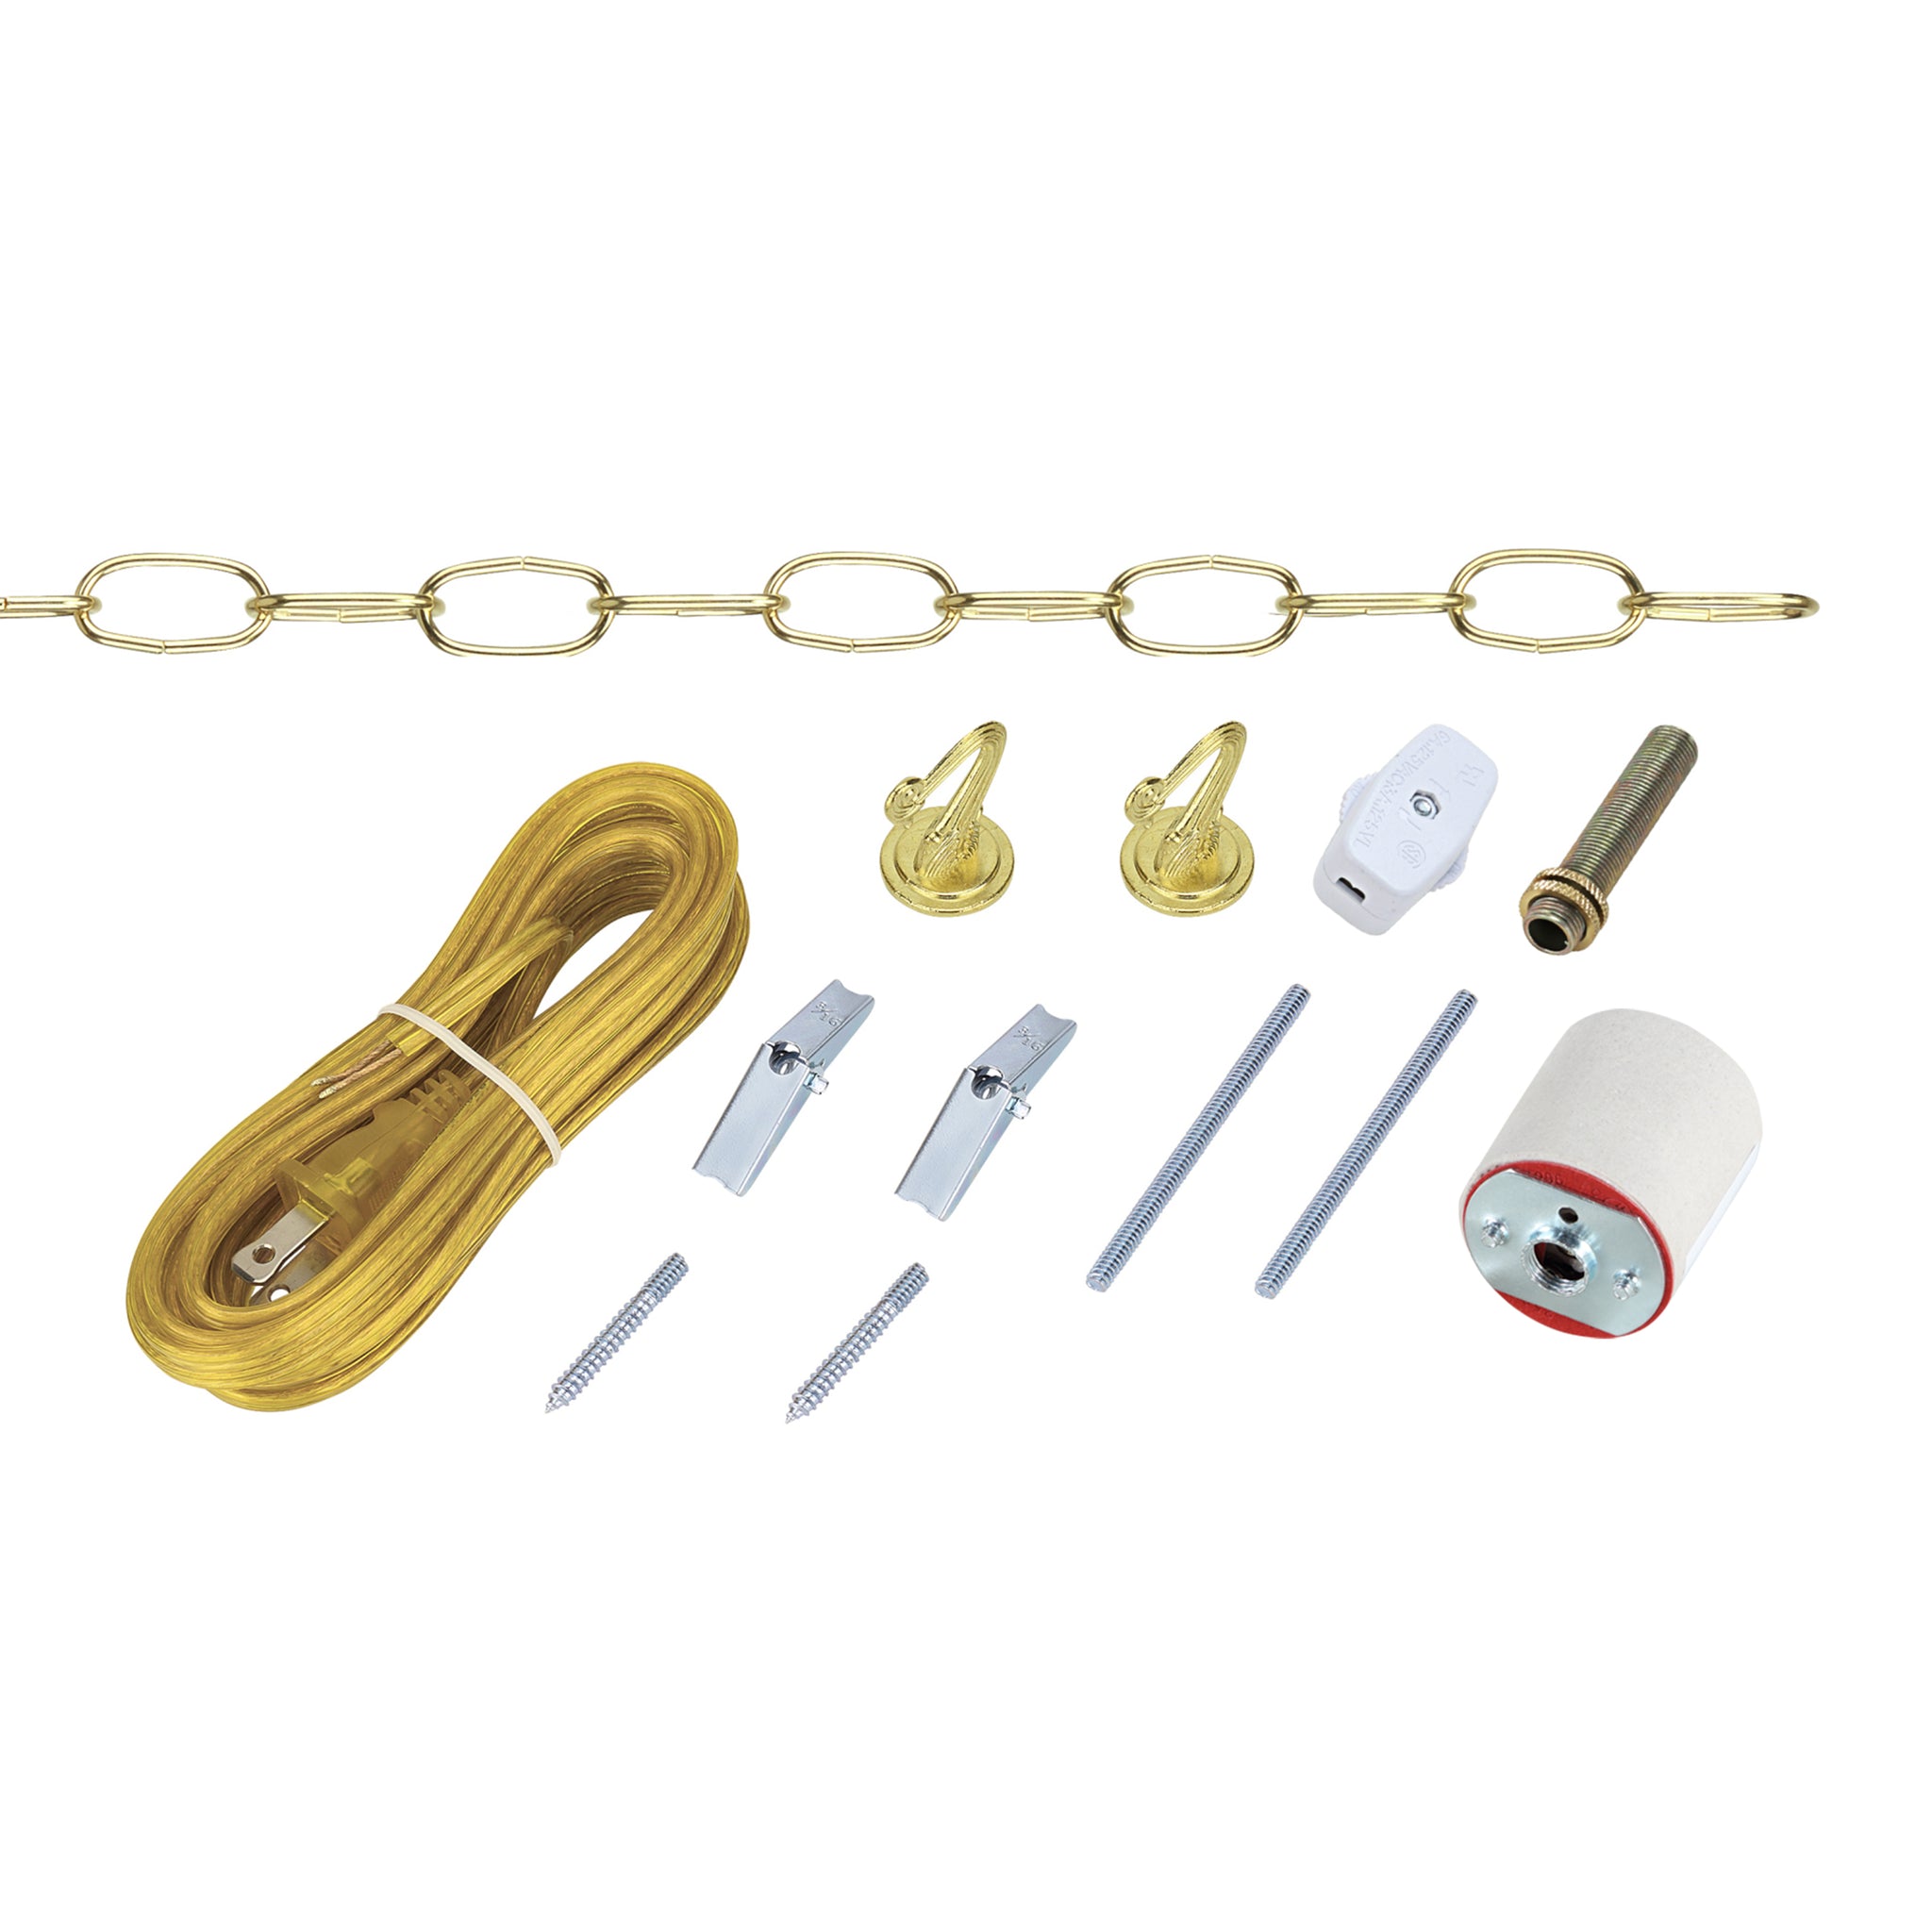 Aspen Creative 21024-2, Make-A-Lamp Kit in Brass, 2 Pack